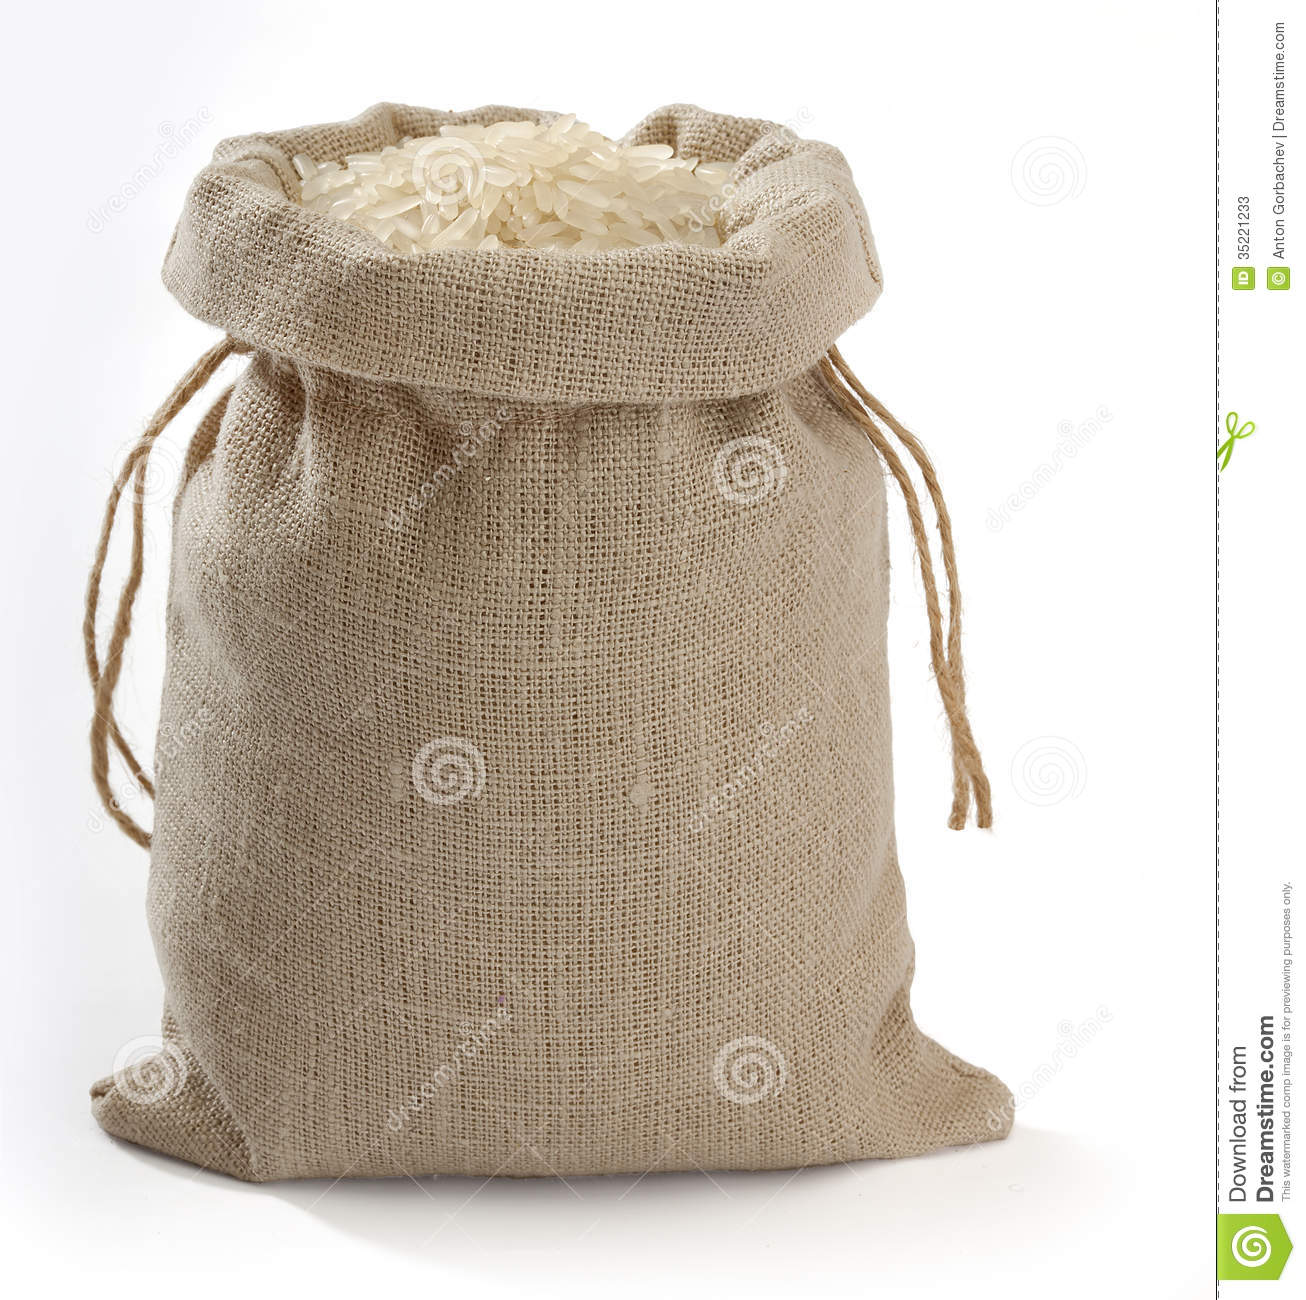 Sack With Rice Stock Photos   Image  35221233